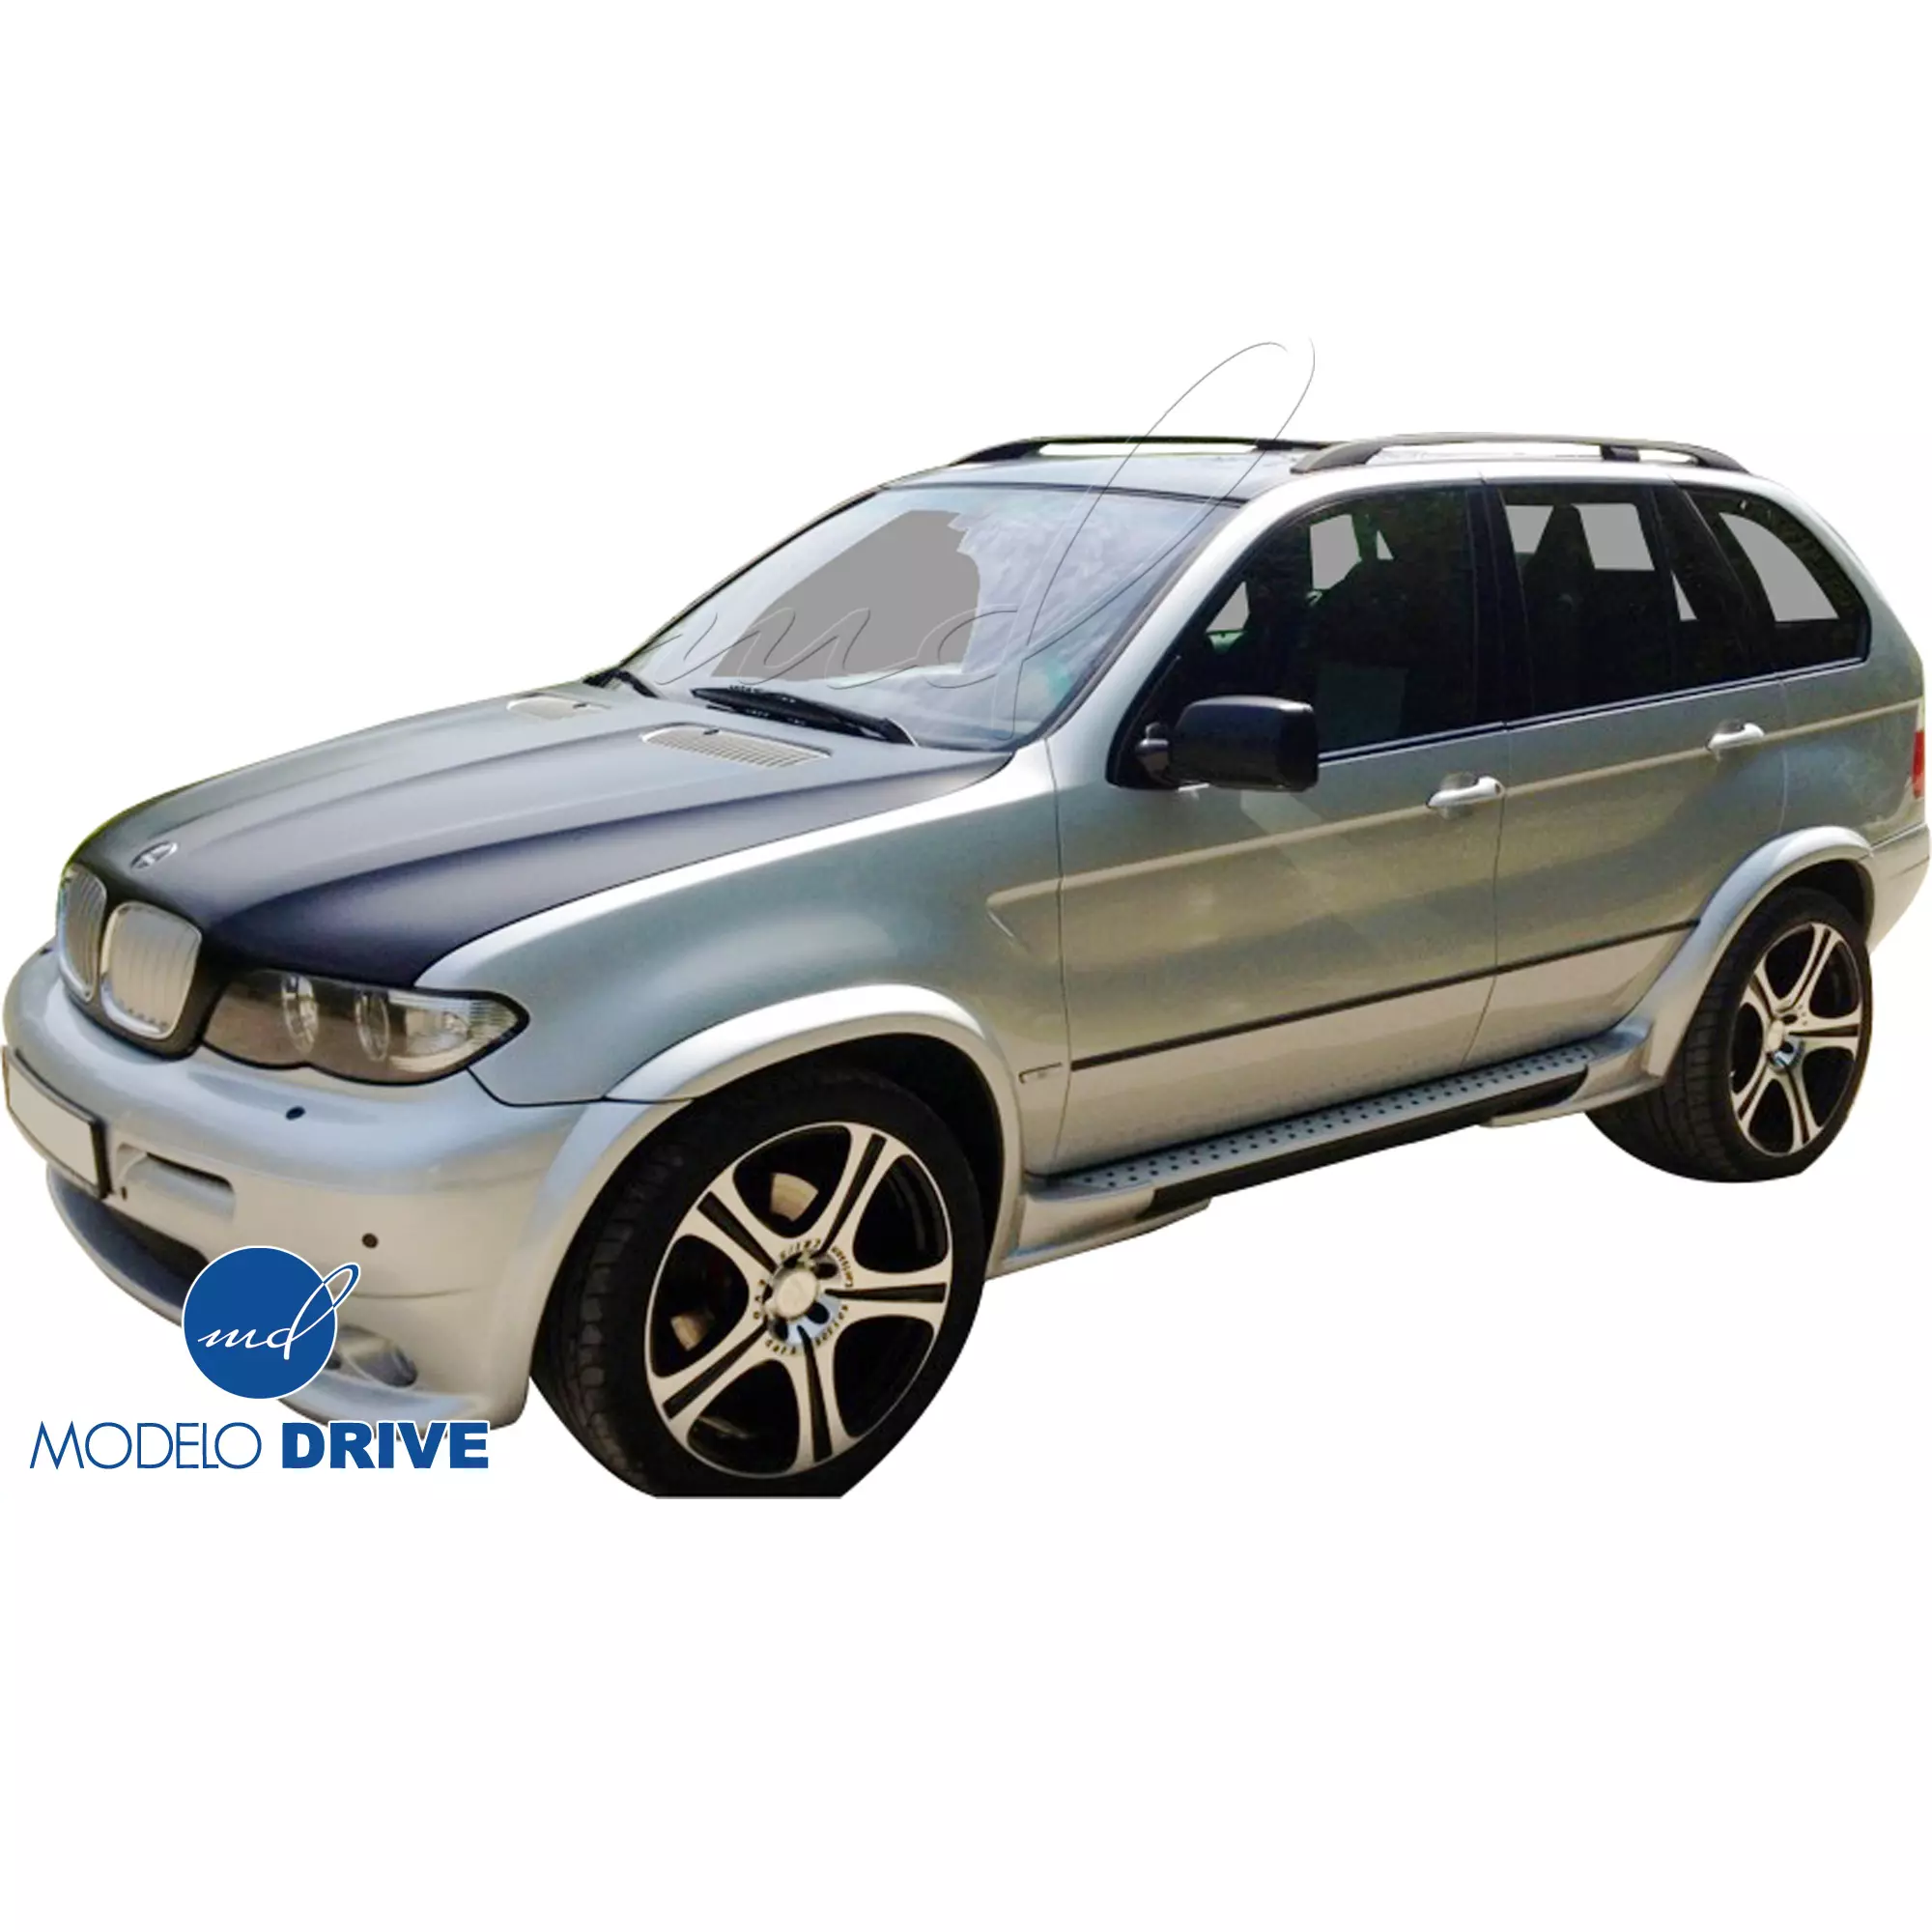 ModeloDrive FRP HAMA Front Bumper > BMW X5 E53 2000-2006 > 5dr - Image 4